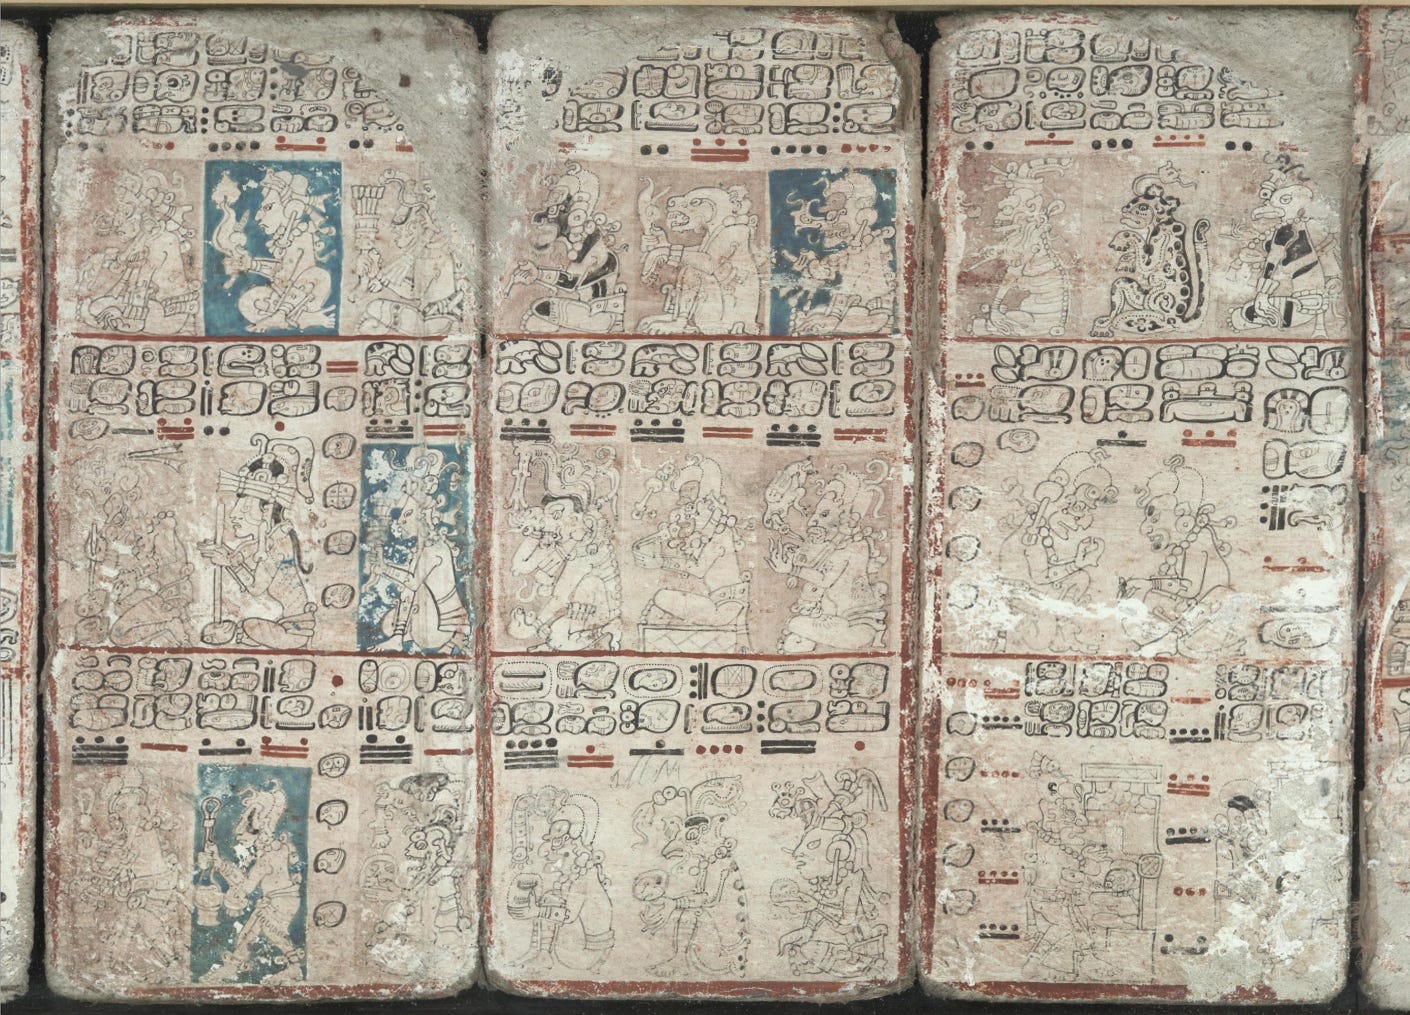 CodexPages6 8.jpg